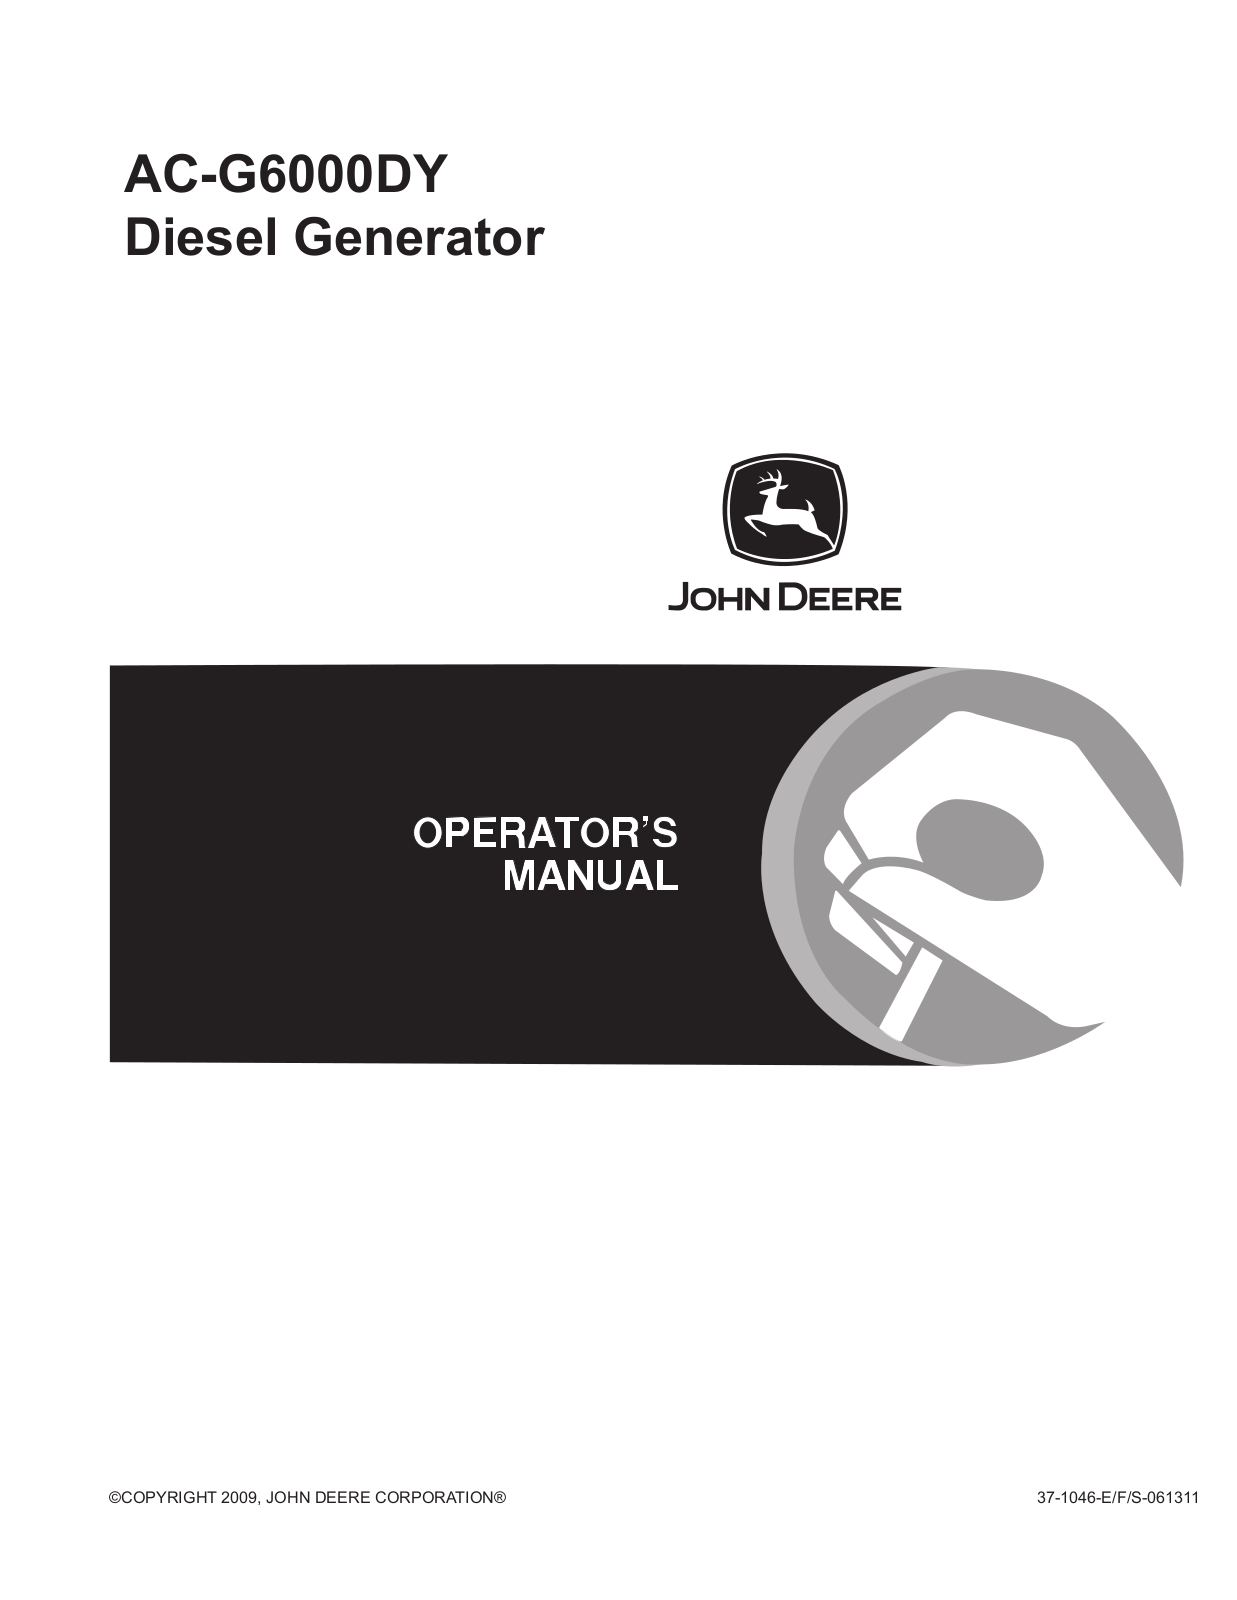 John Deere AC-G6000DY OPERATOR’S MANUAL